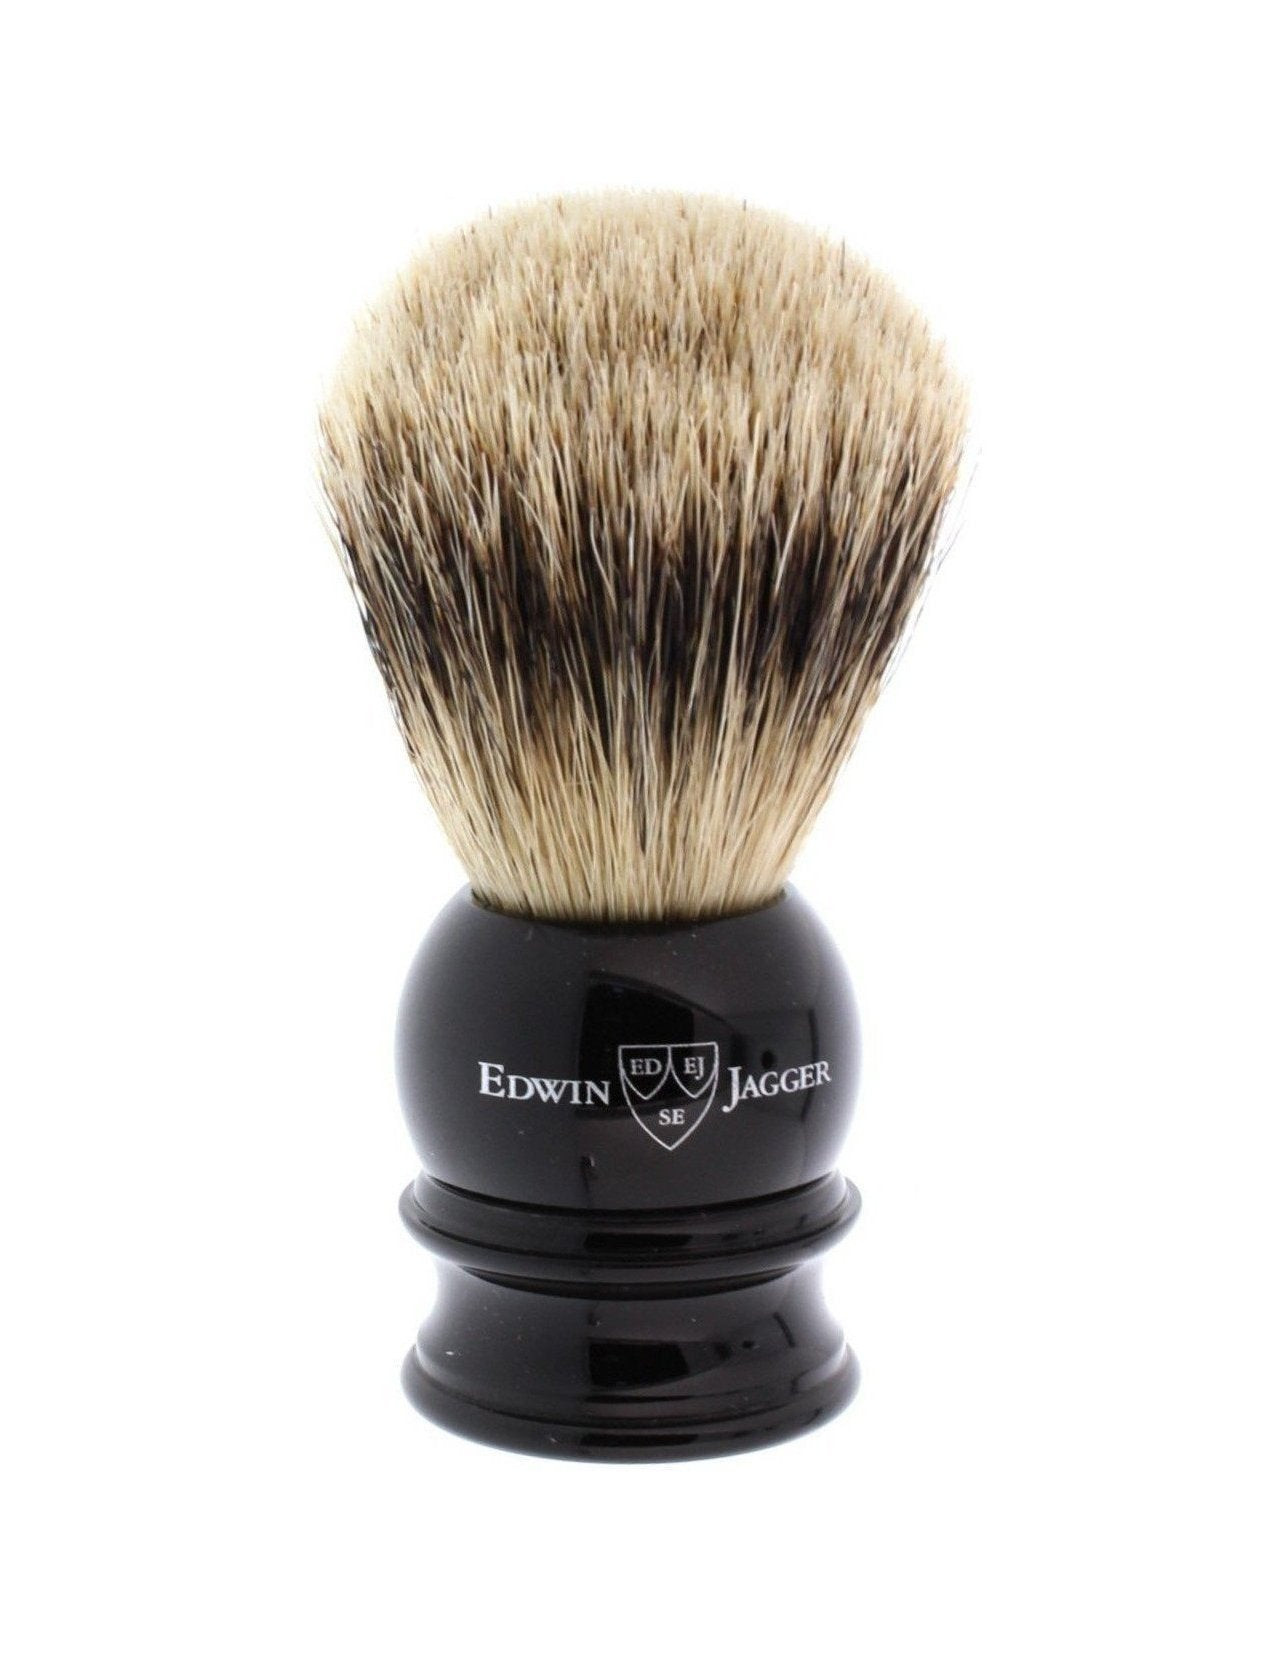 Product image 1 for Edwin Jagger Silver Tip Badger Shaving Brush, Medium, Black